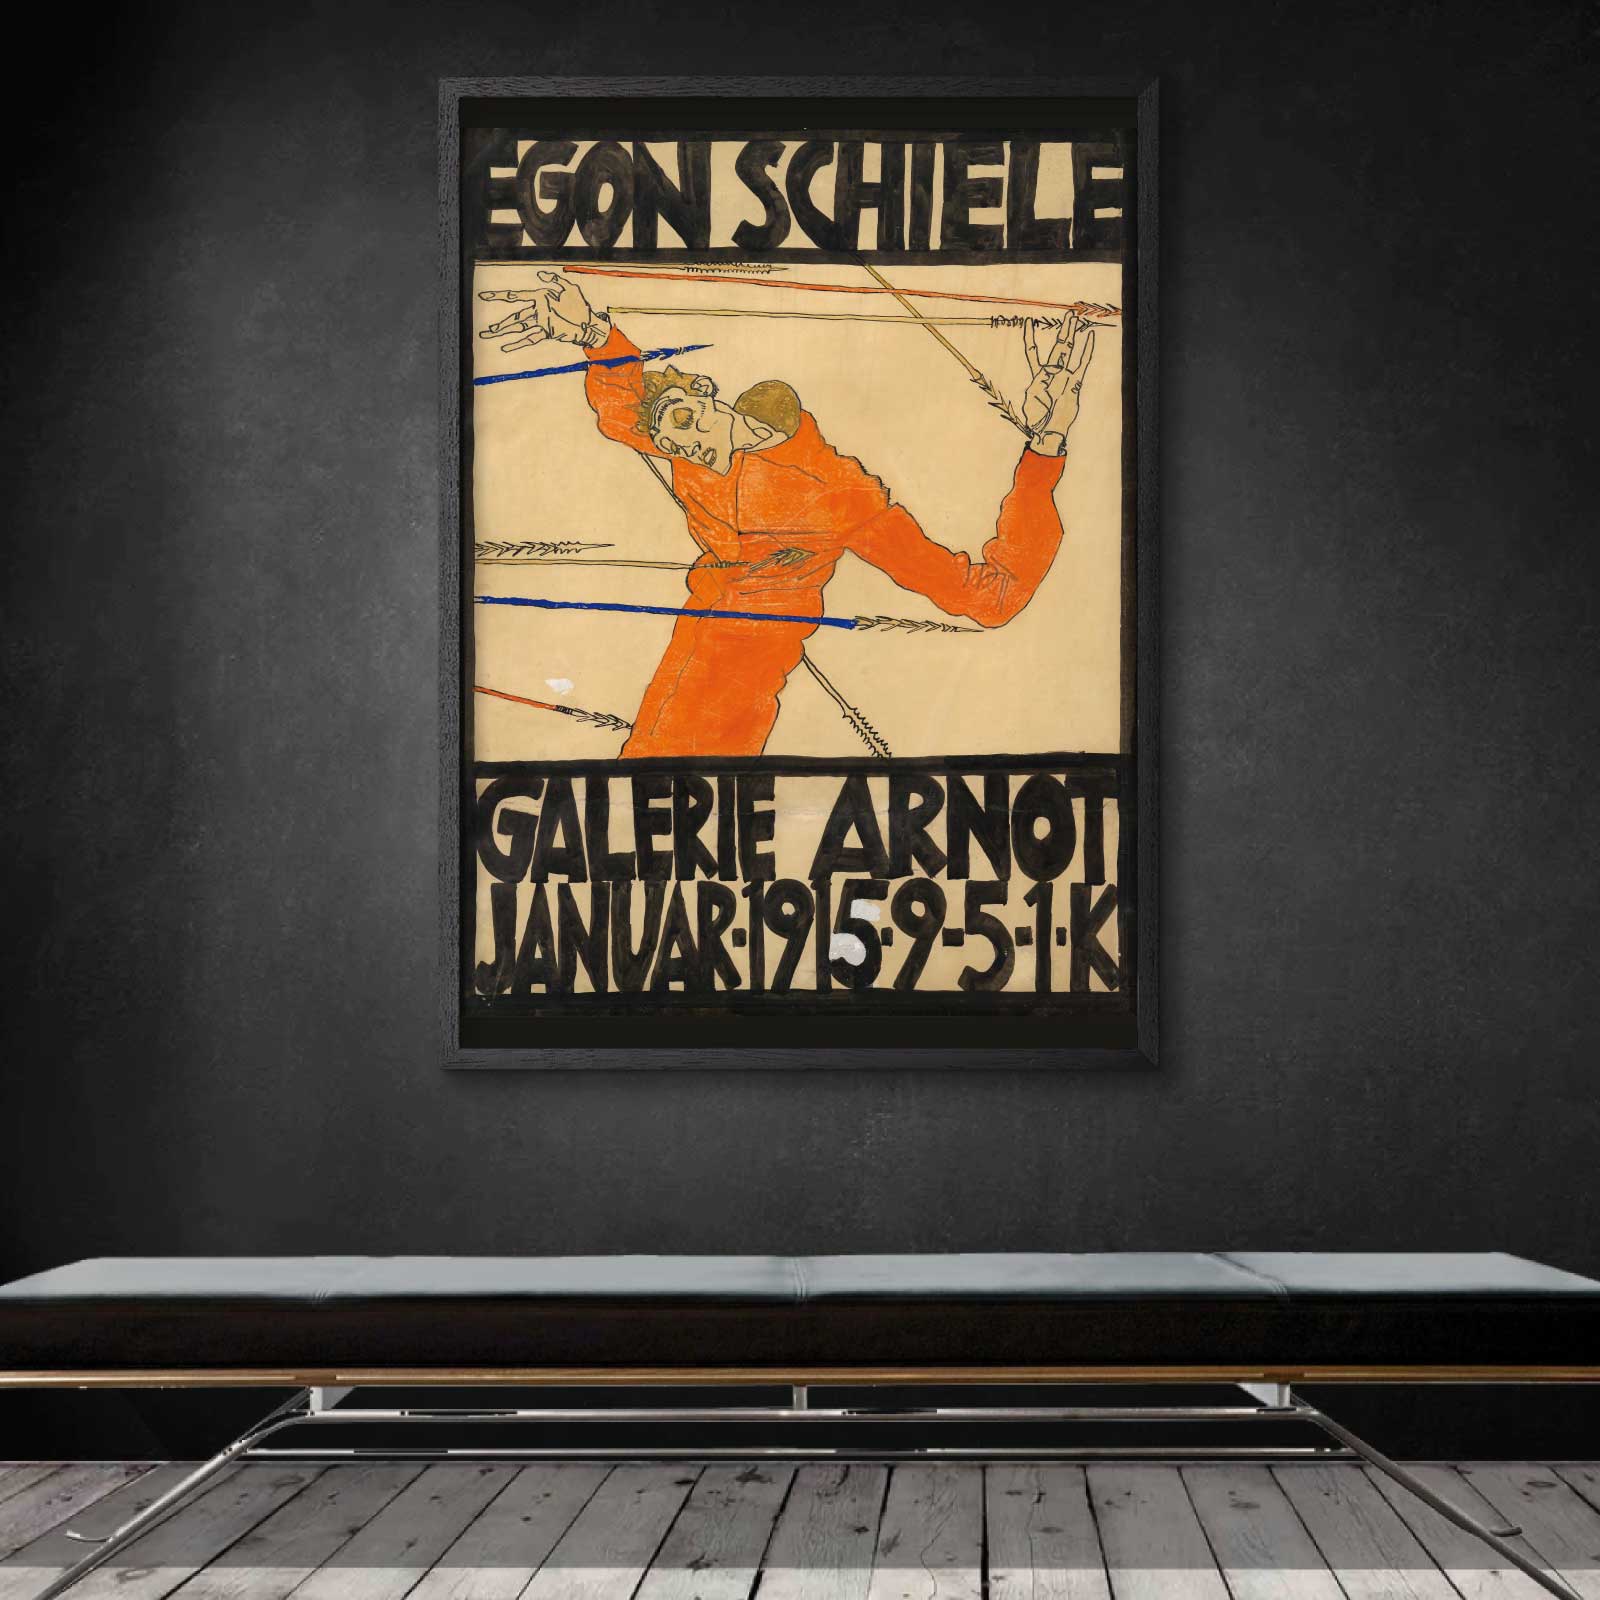 Galerie Arnot poster featuring Egon Schiele